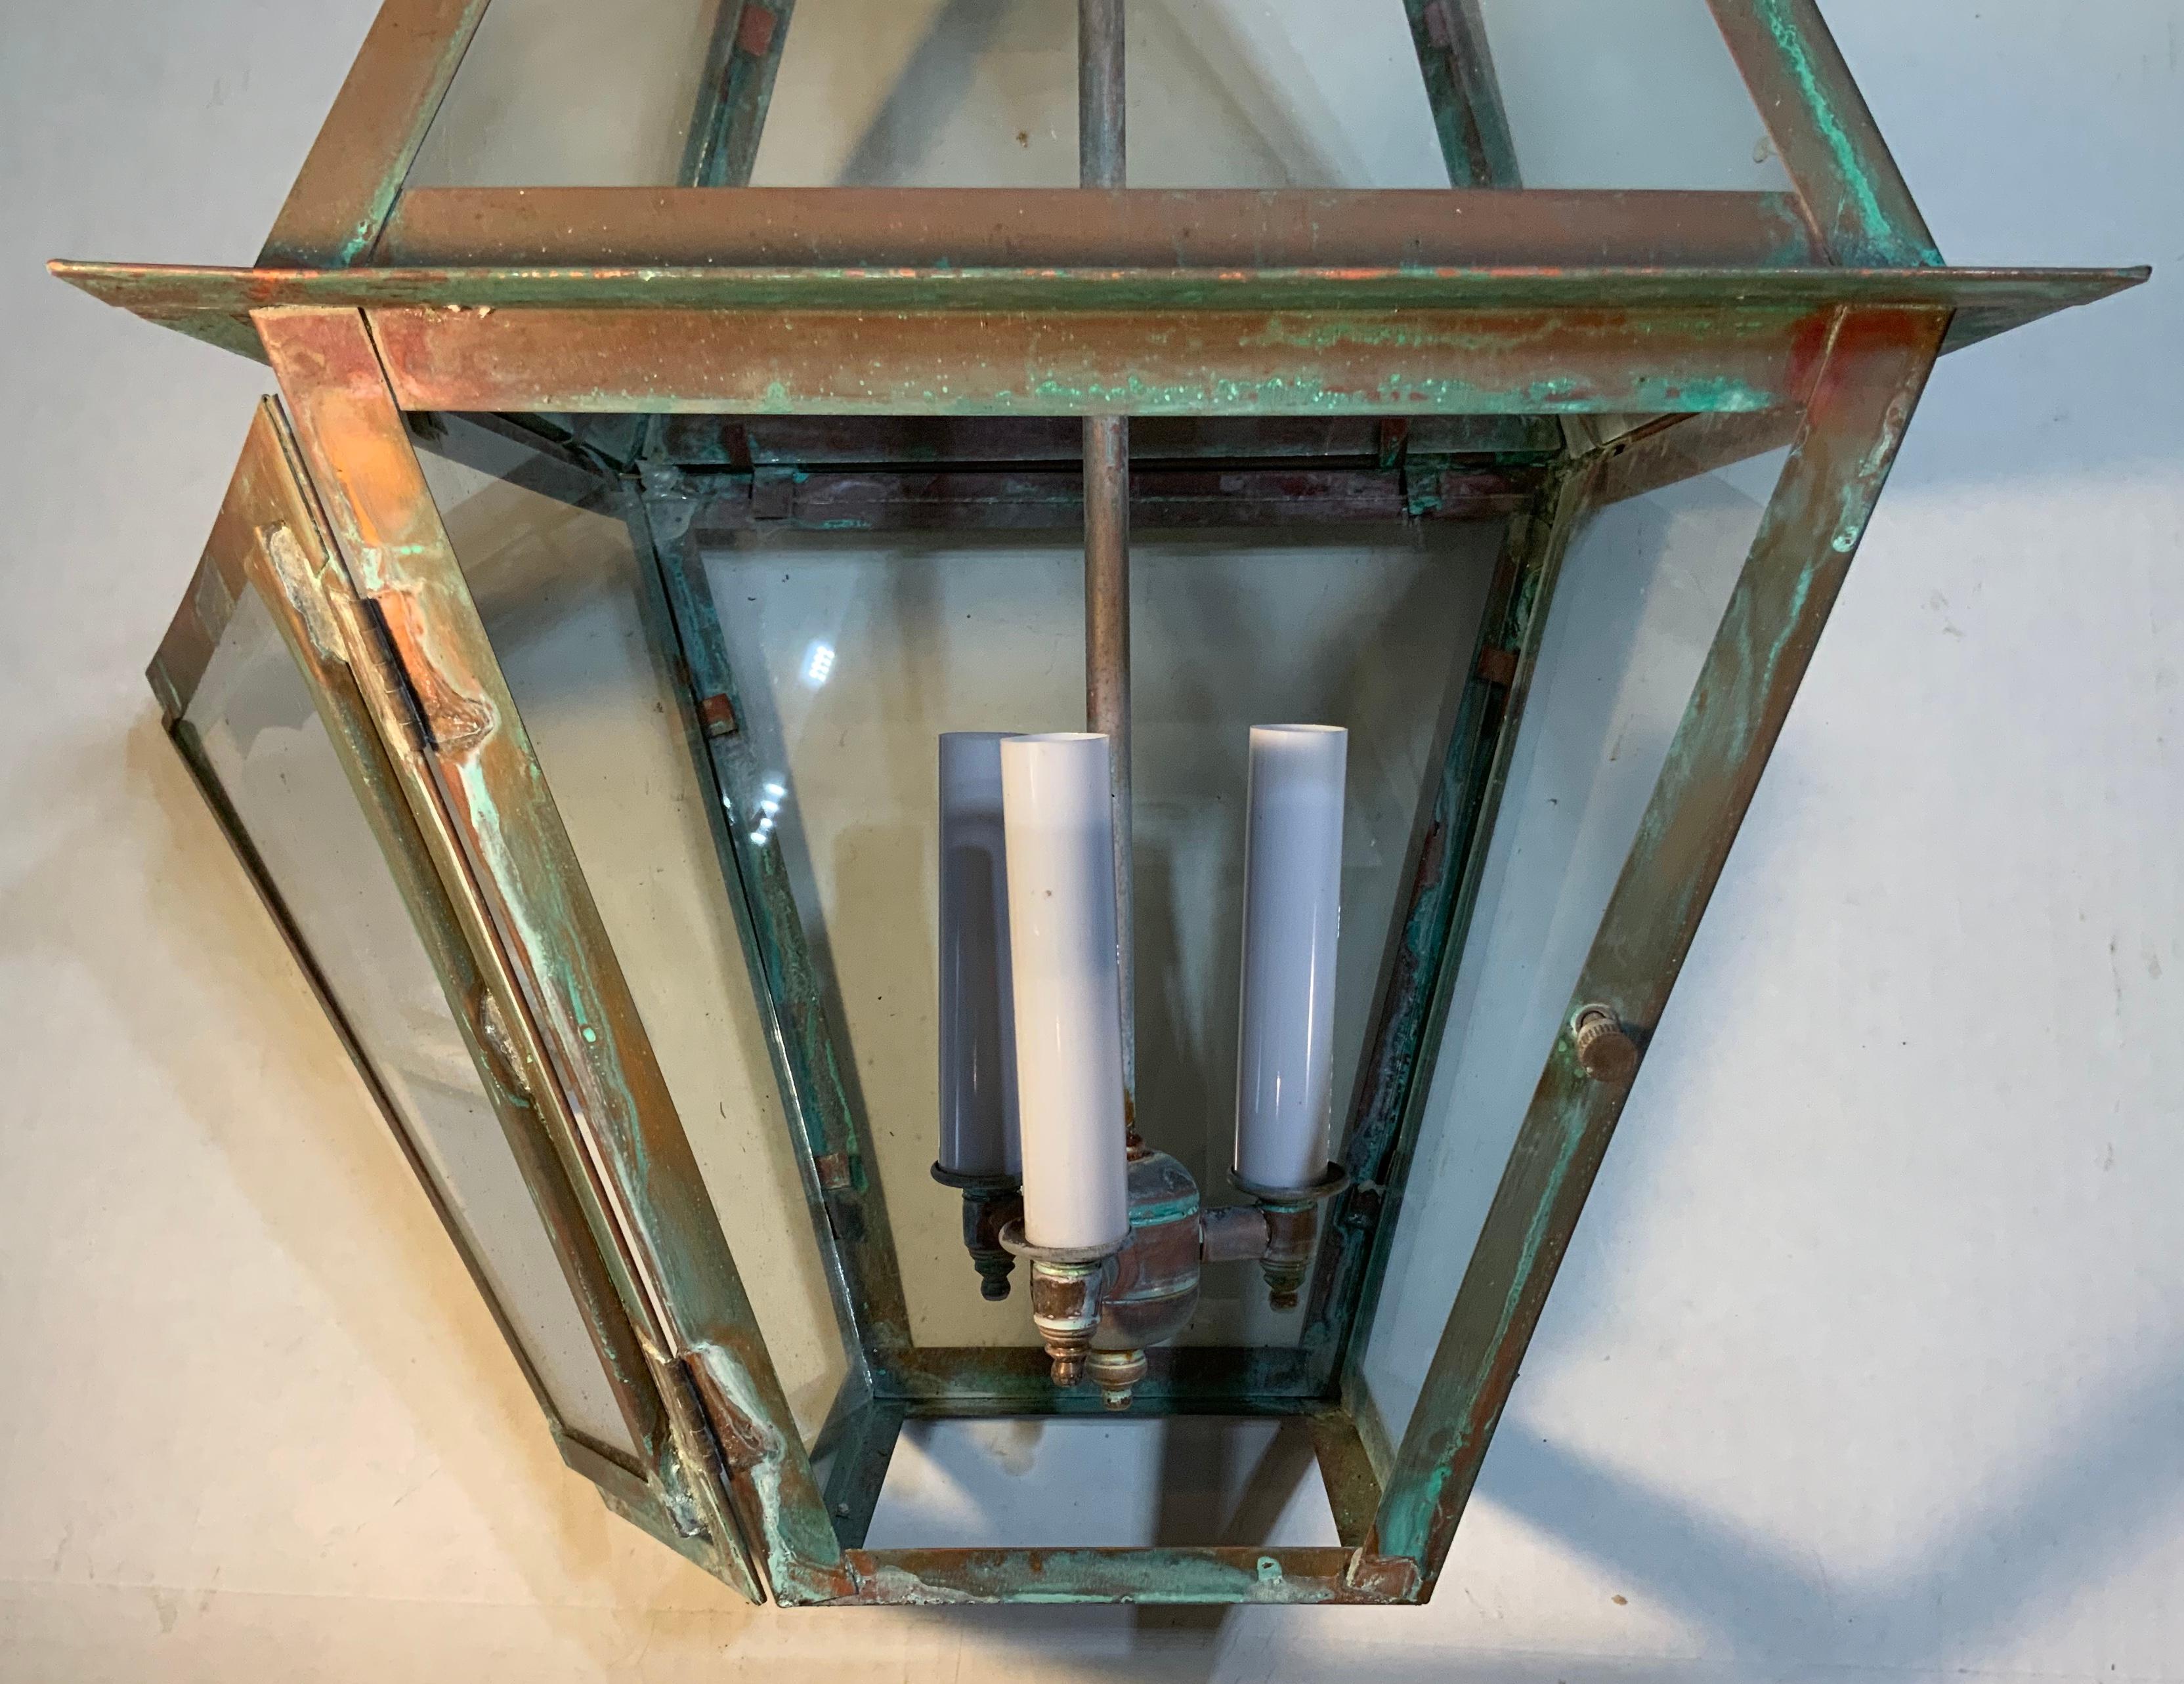 Four-Sides Hanging Copper Lantern 1